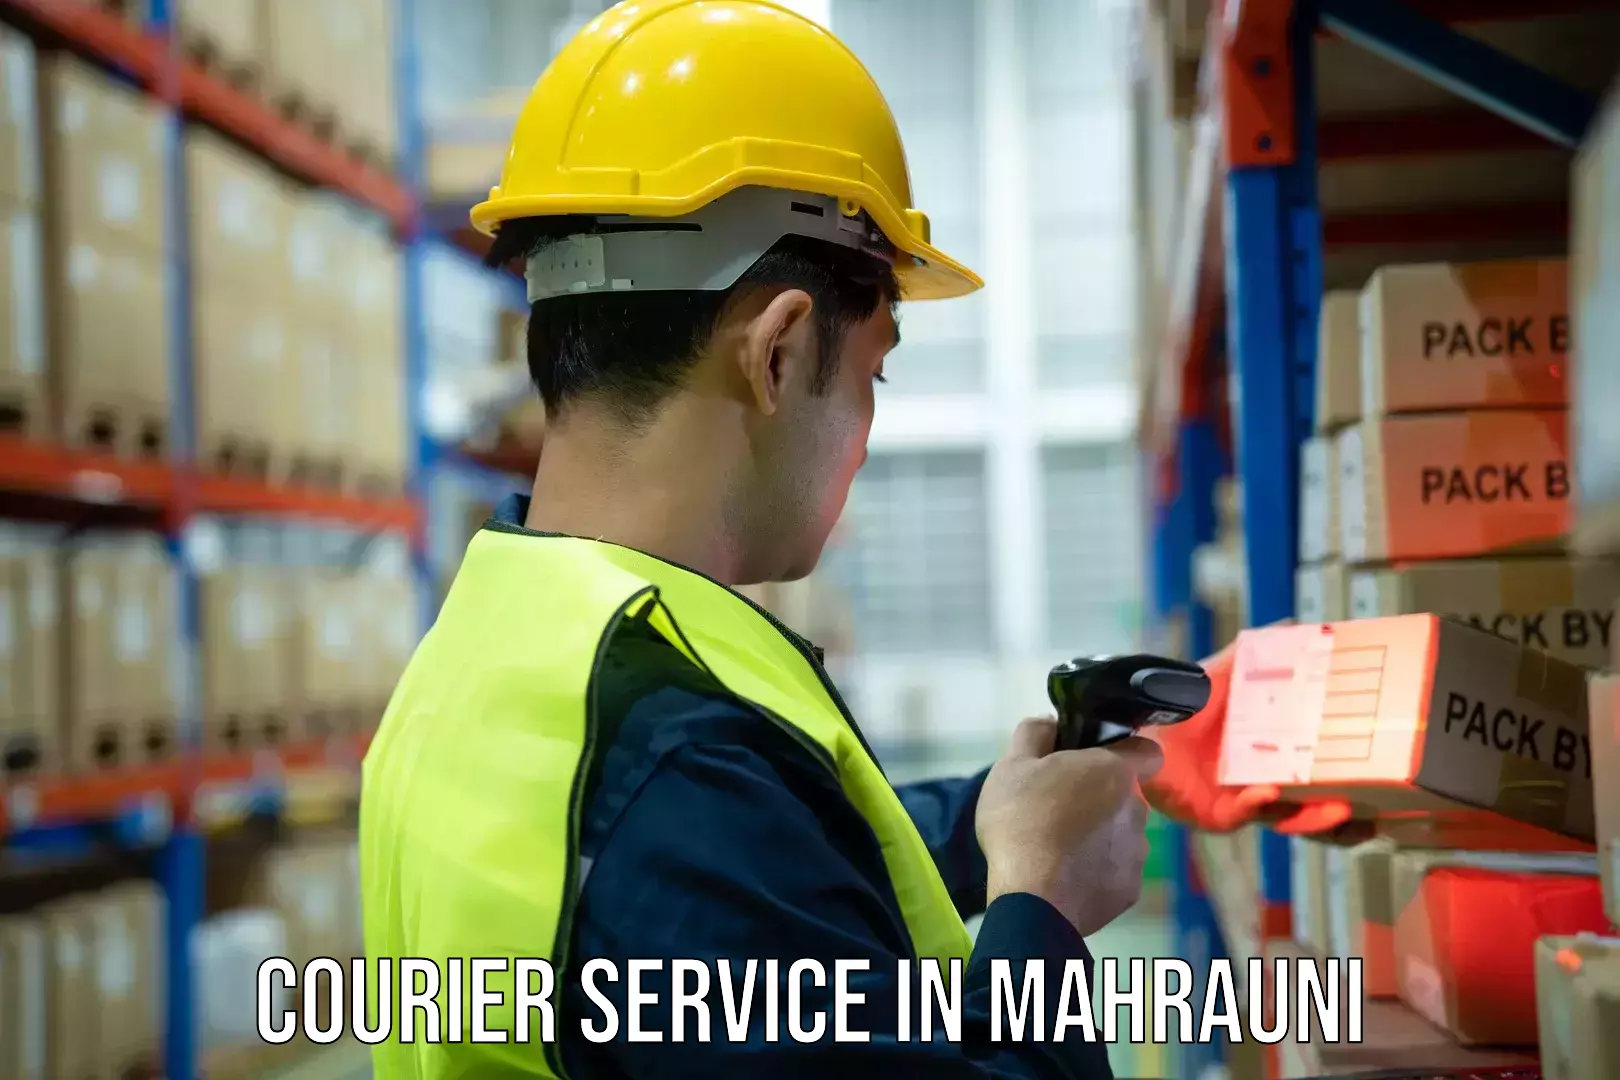 Regular parcel service in Mahrauni